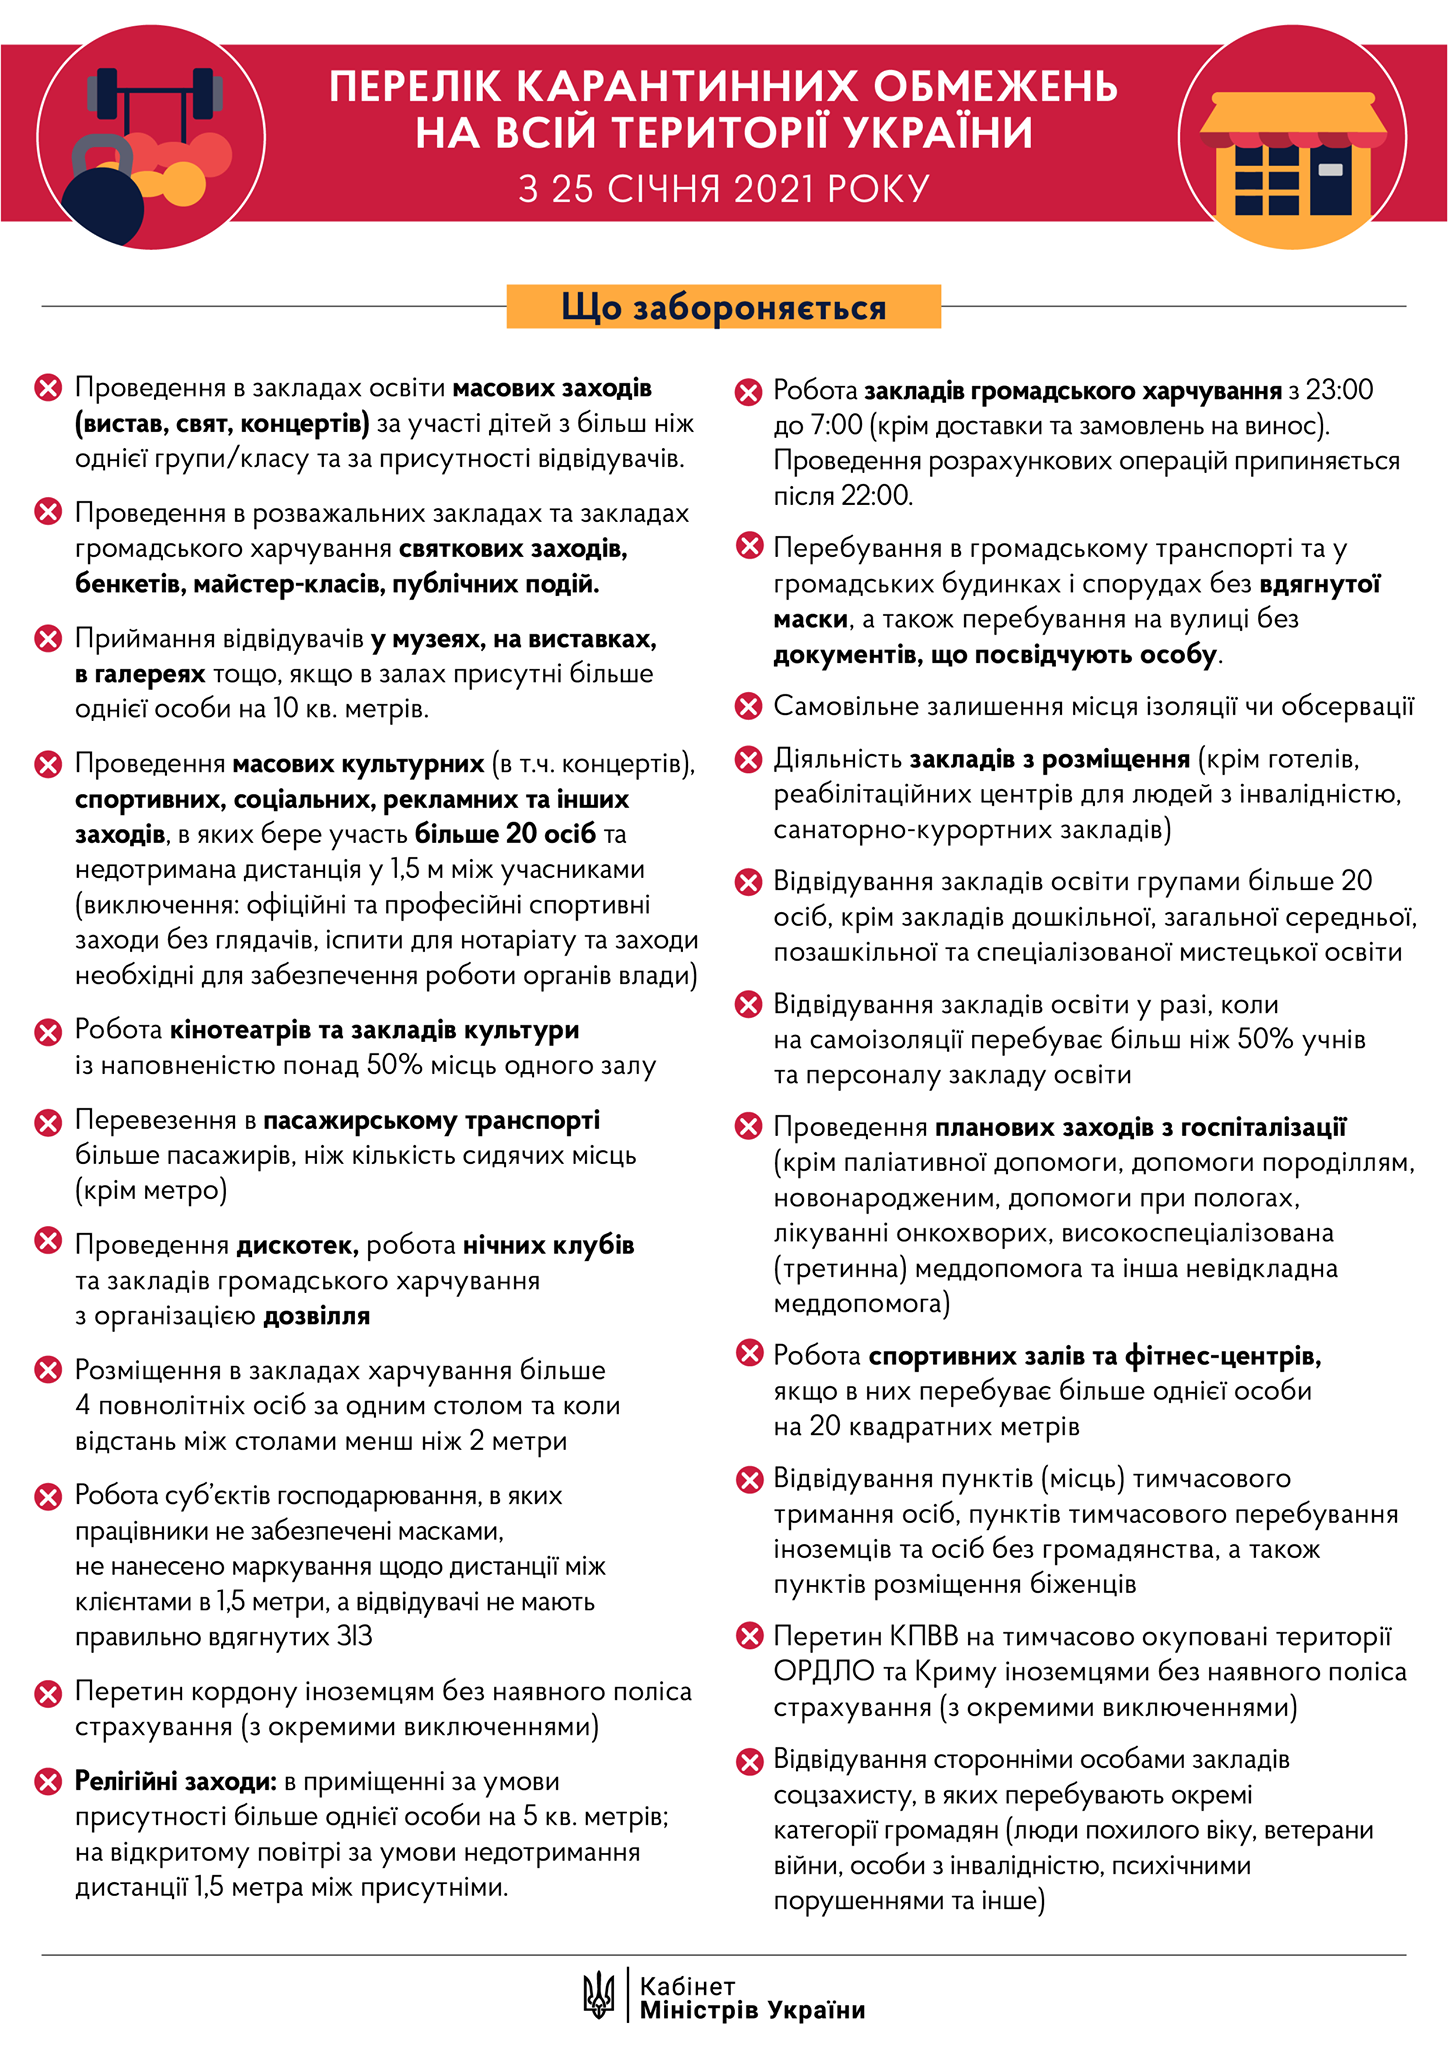 Инфографика: kmu.gov.ua